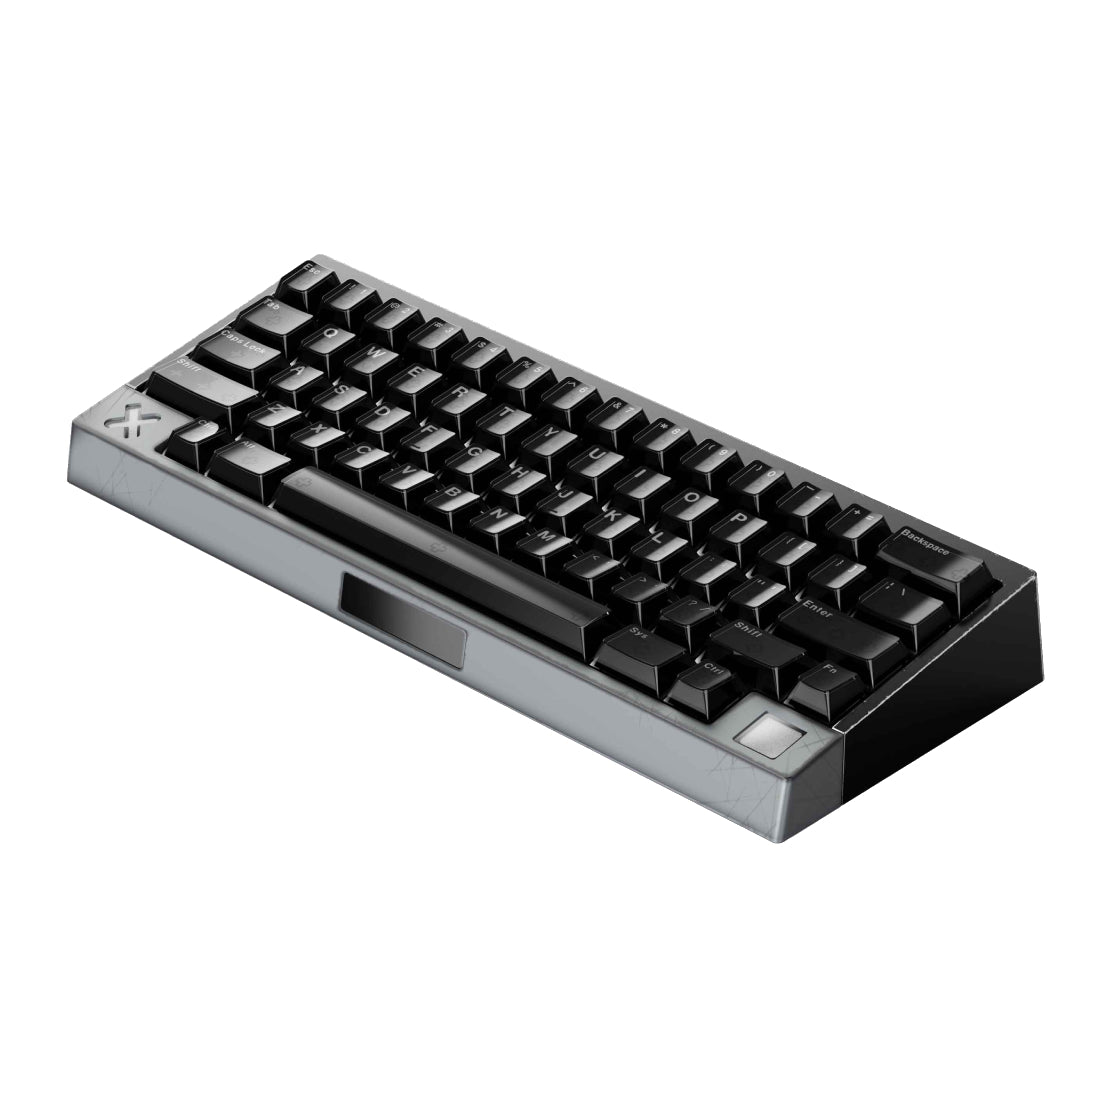 AngryMiao AM Compact Touch Wireless Keyboard - Mech Love - لوحة مفاتيح - Store 974 | ستور ٩٧٤